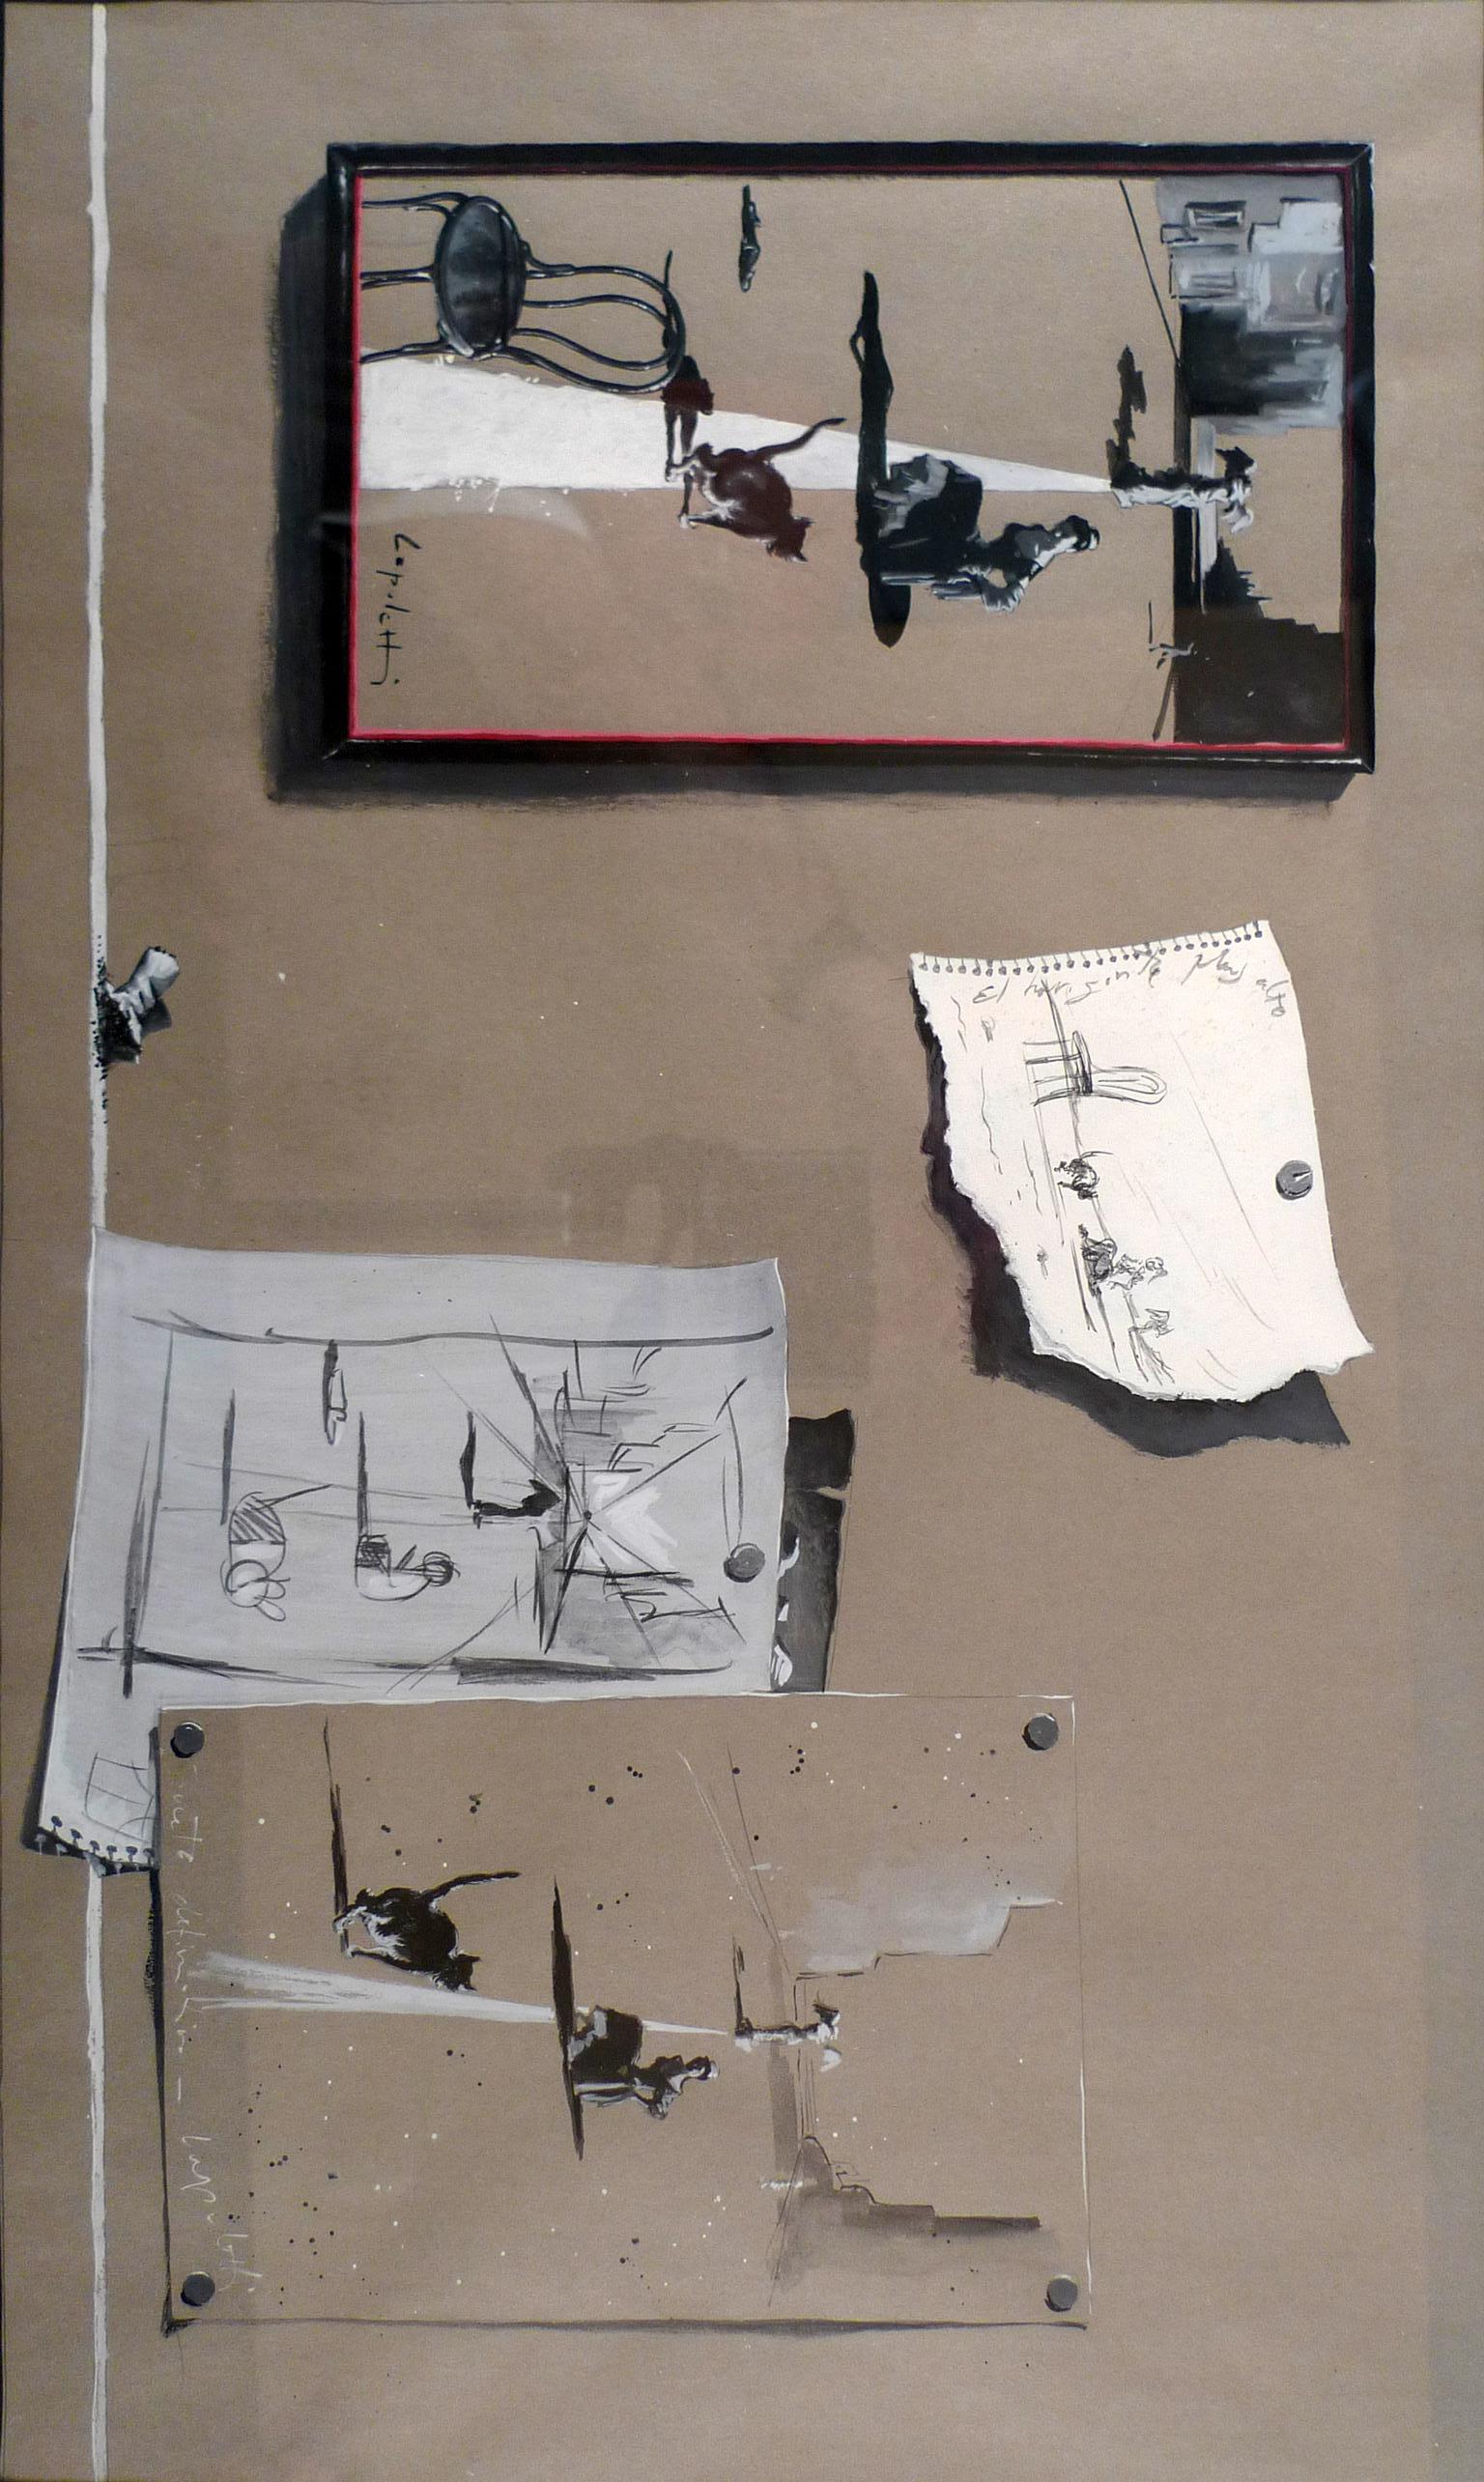 "Untitled", A Surrealist Mixed Media on Paper by Spanish José Manuel Capuletti - Art by Jose Manuel Capuletti